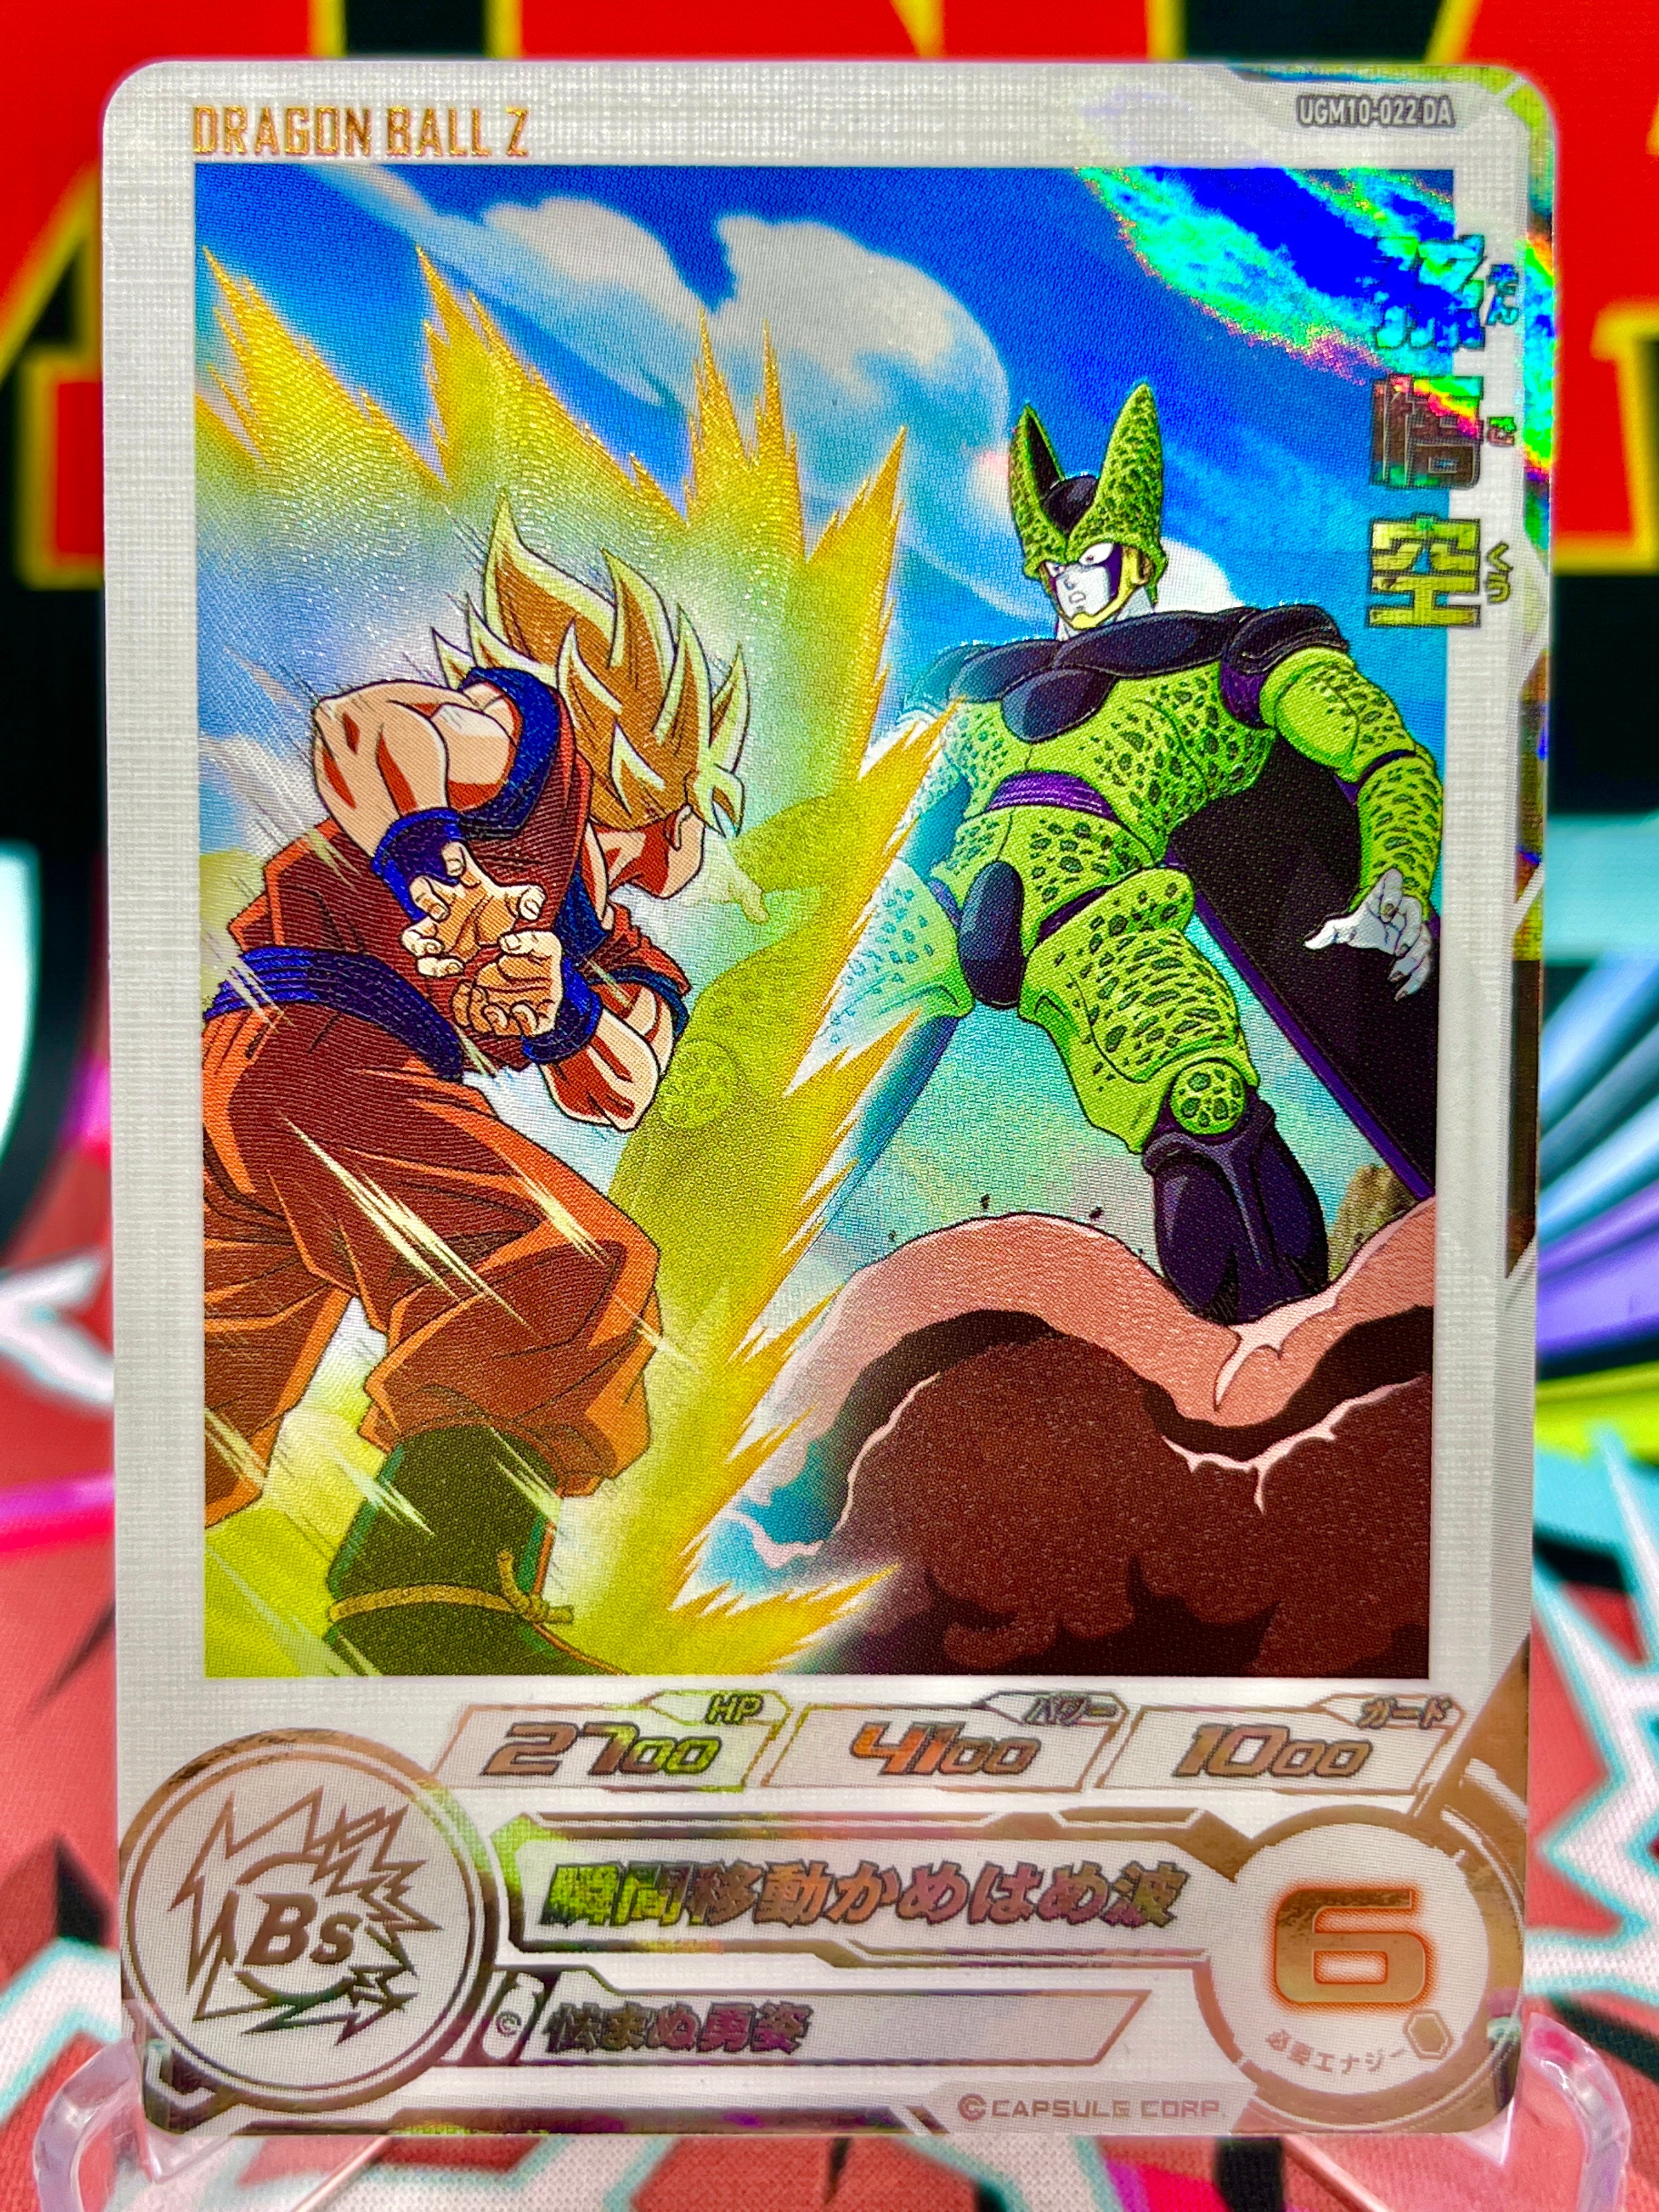 UGM10-022 DA Son Goku & Cell SR (2023)